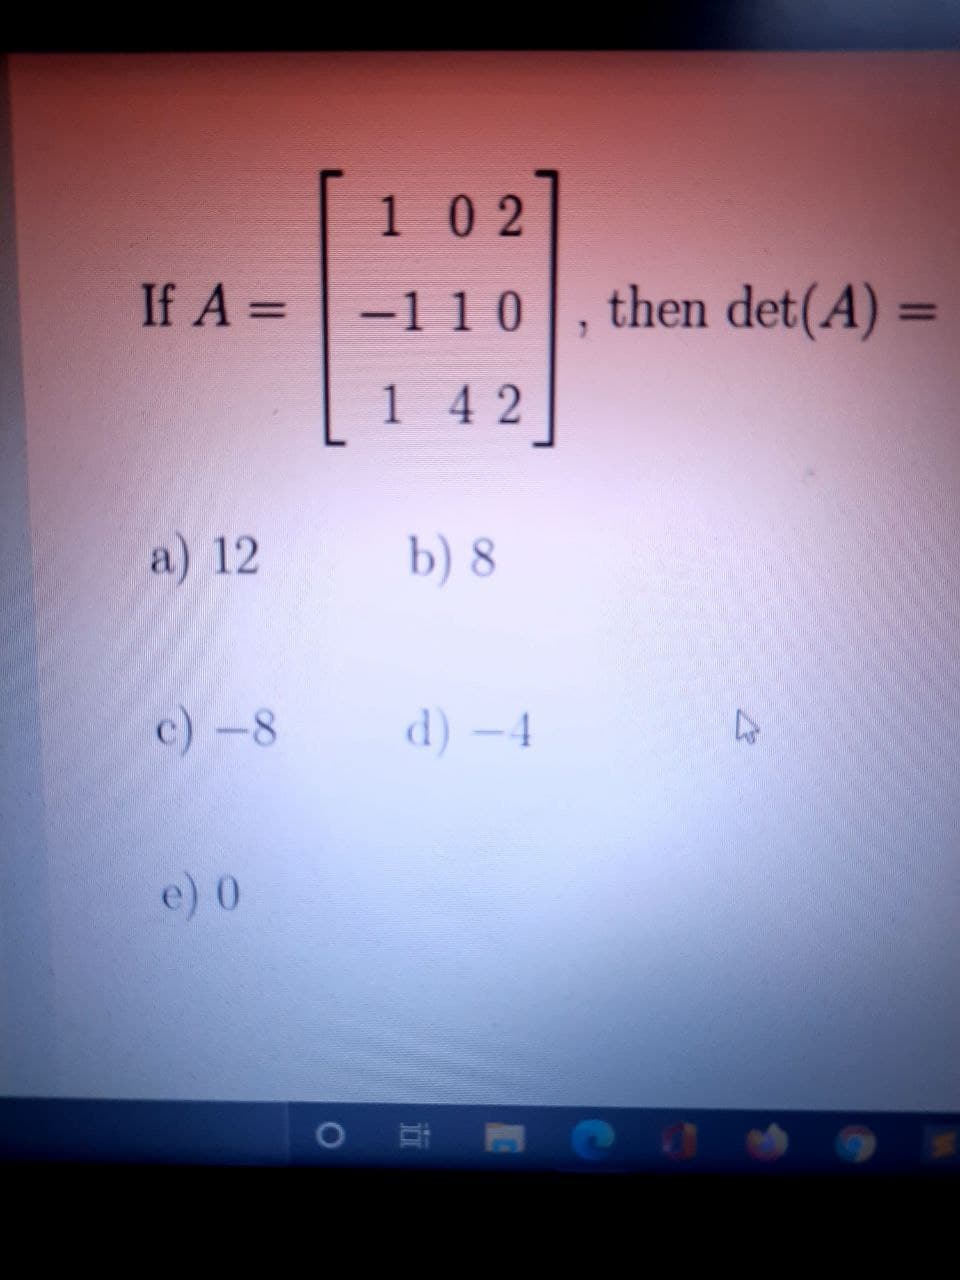 1 02
If A =
-110
then det(A) =
%3D
142
a) 12
b) 8
c) -8
d) –4
e) 0
